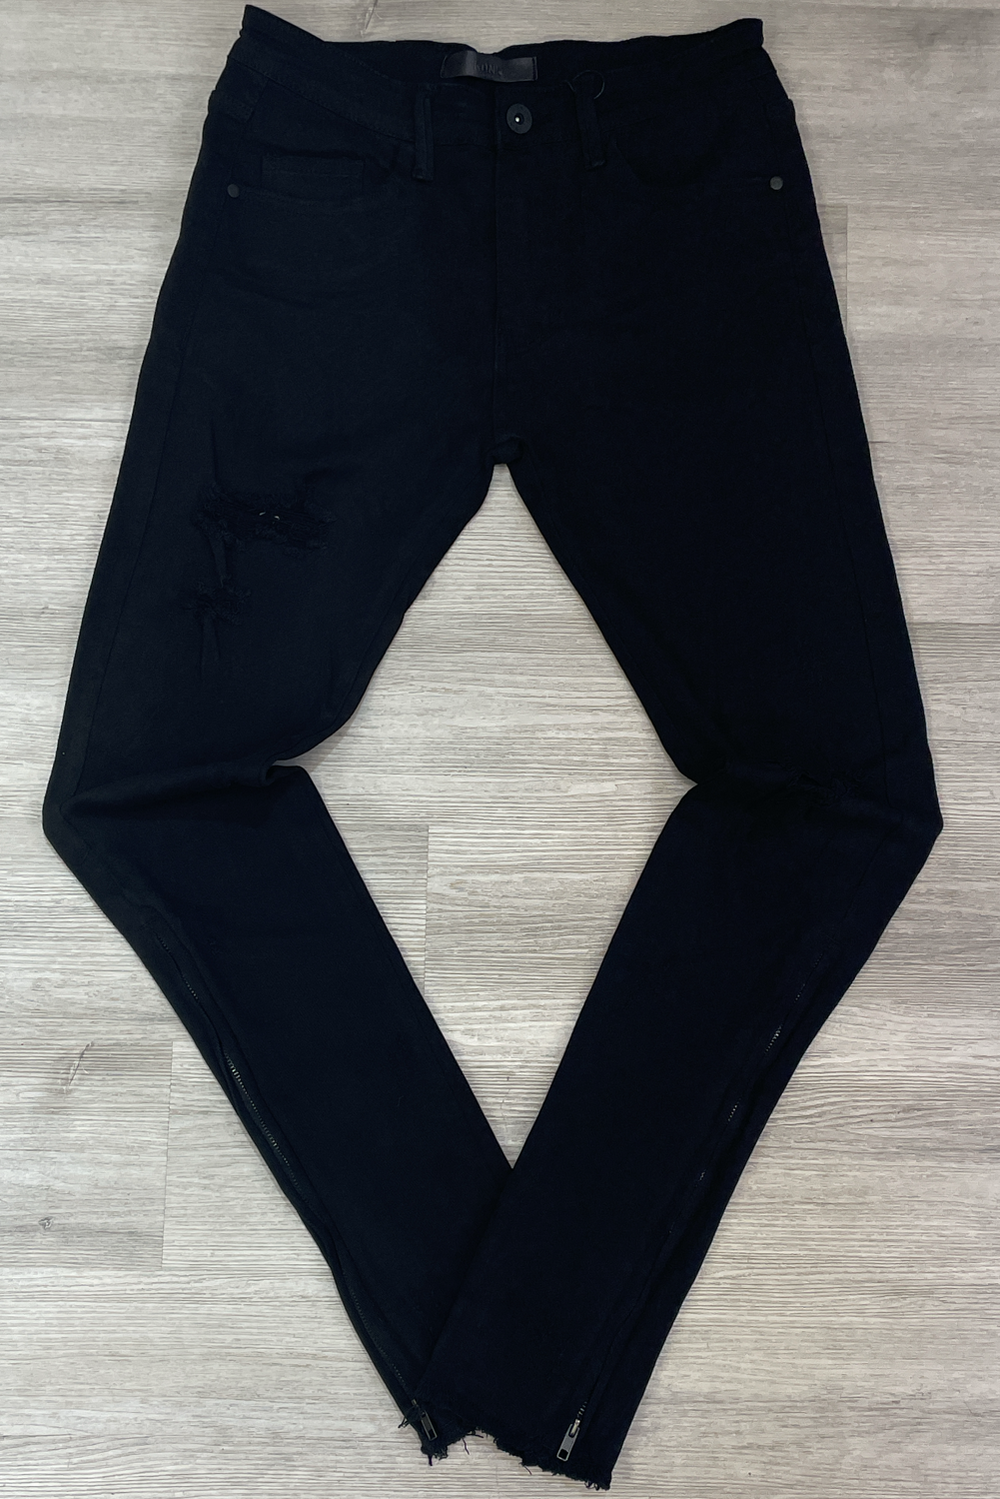 KDNK - ankle zippered skinny flare jeans (black)